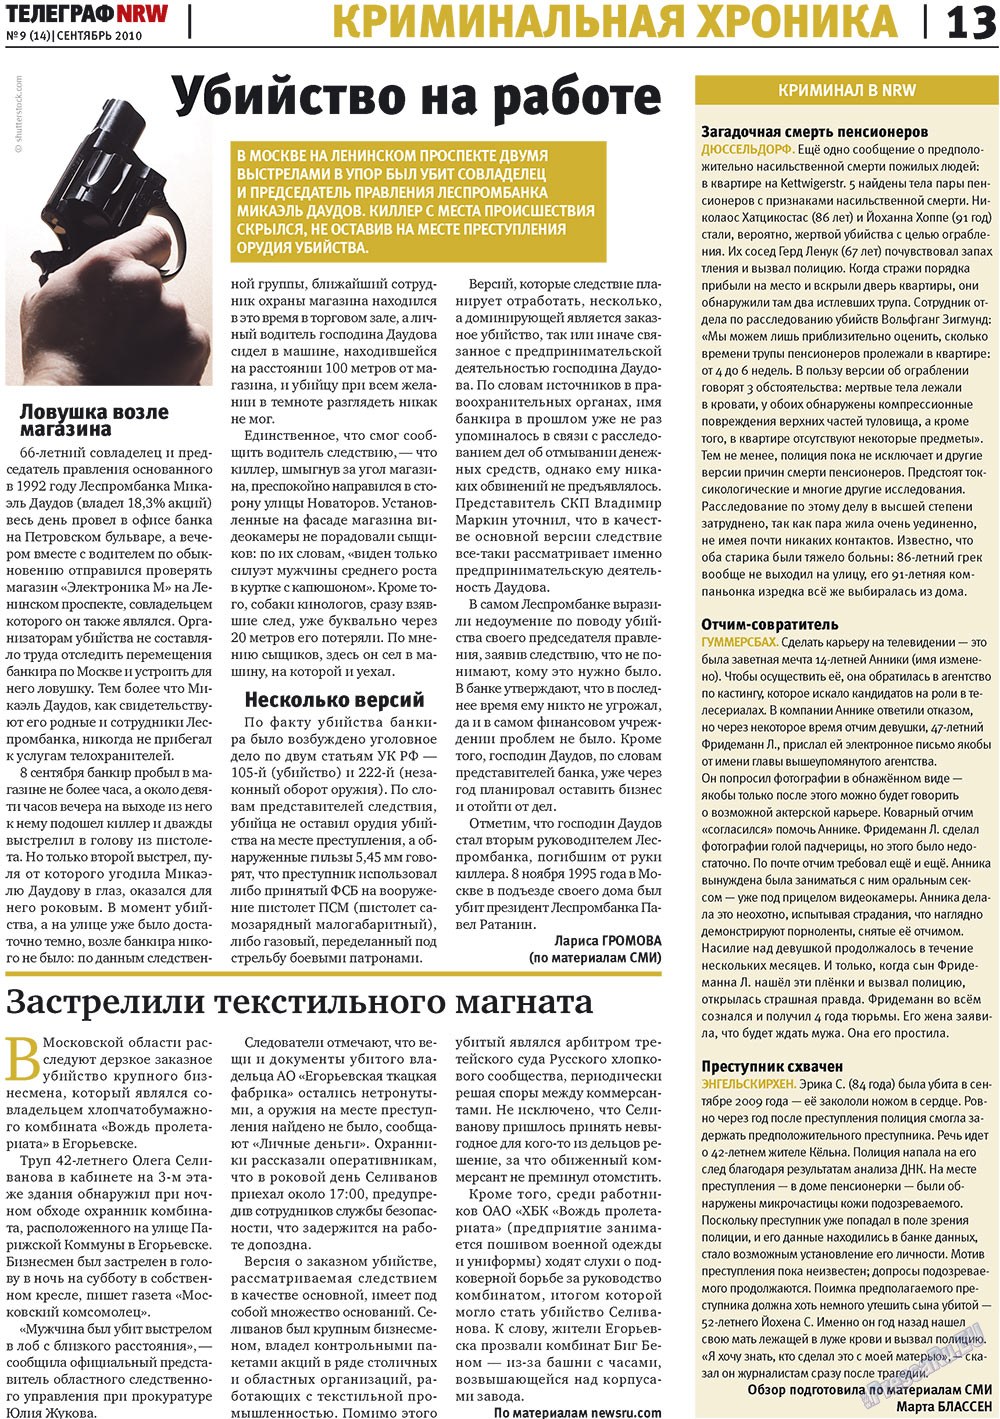 Телеграф NRW, газета. 2010 №9 стр.13